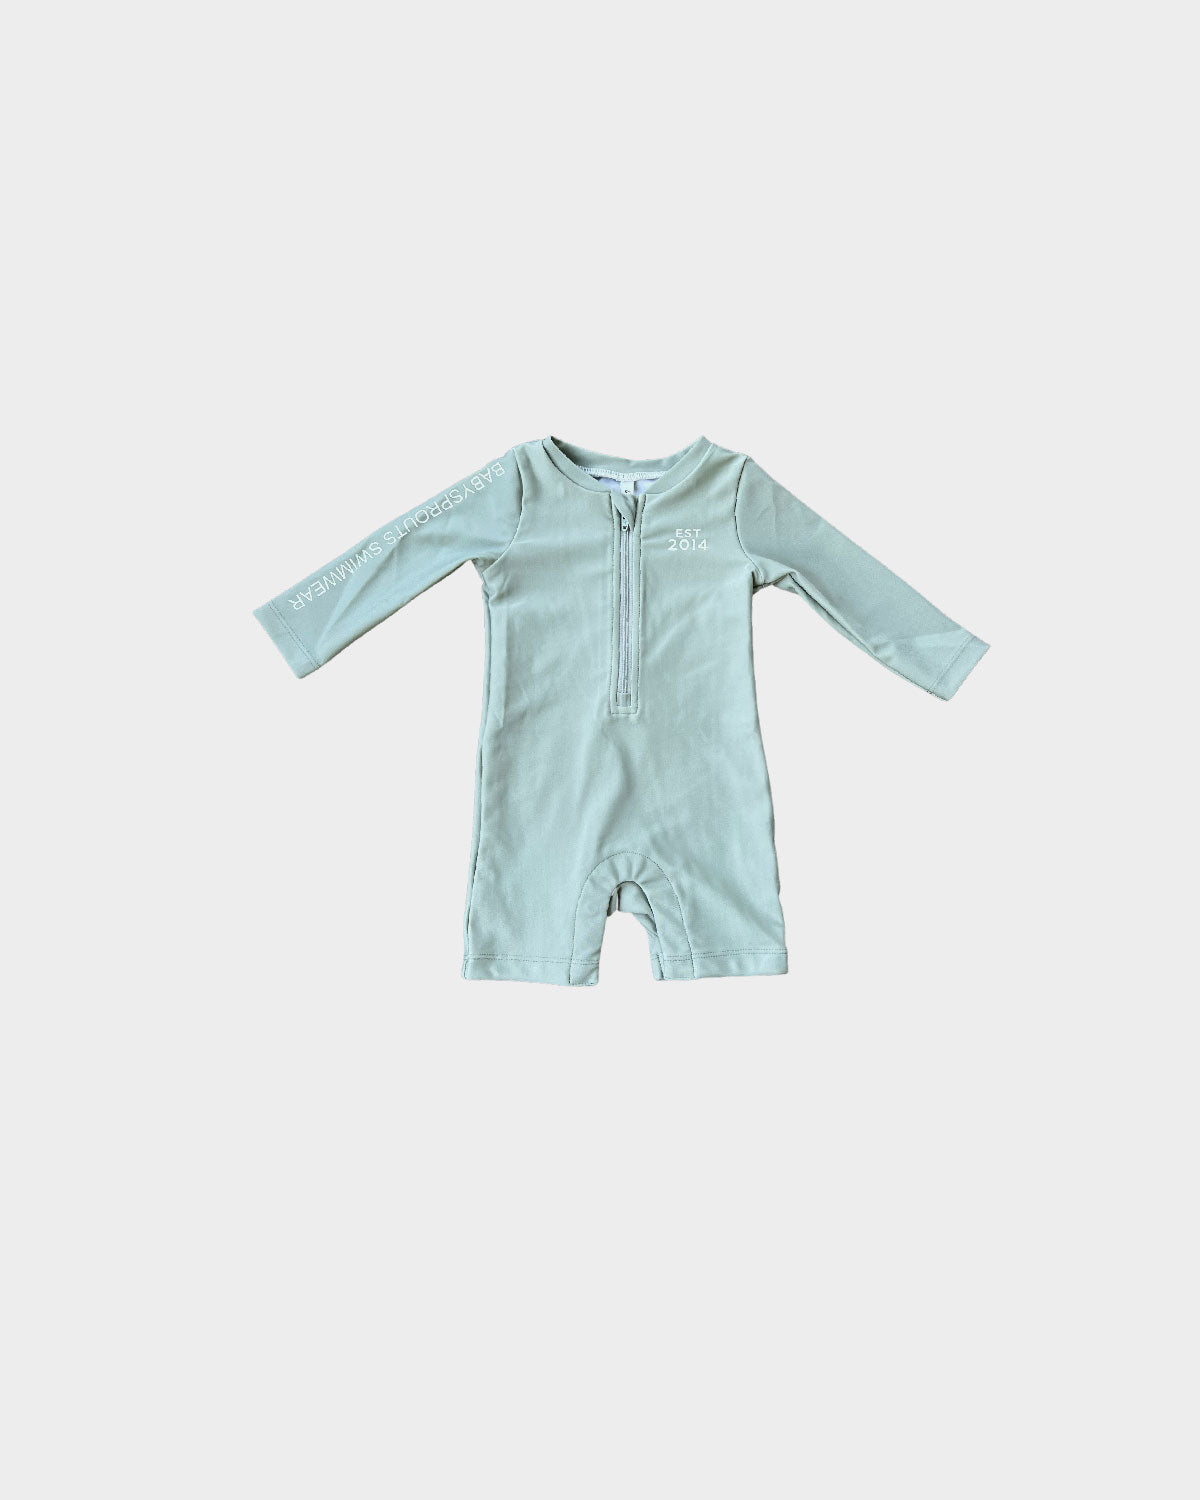 Baby One-Piece Rashguard Swim Suit SAMPLES